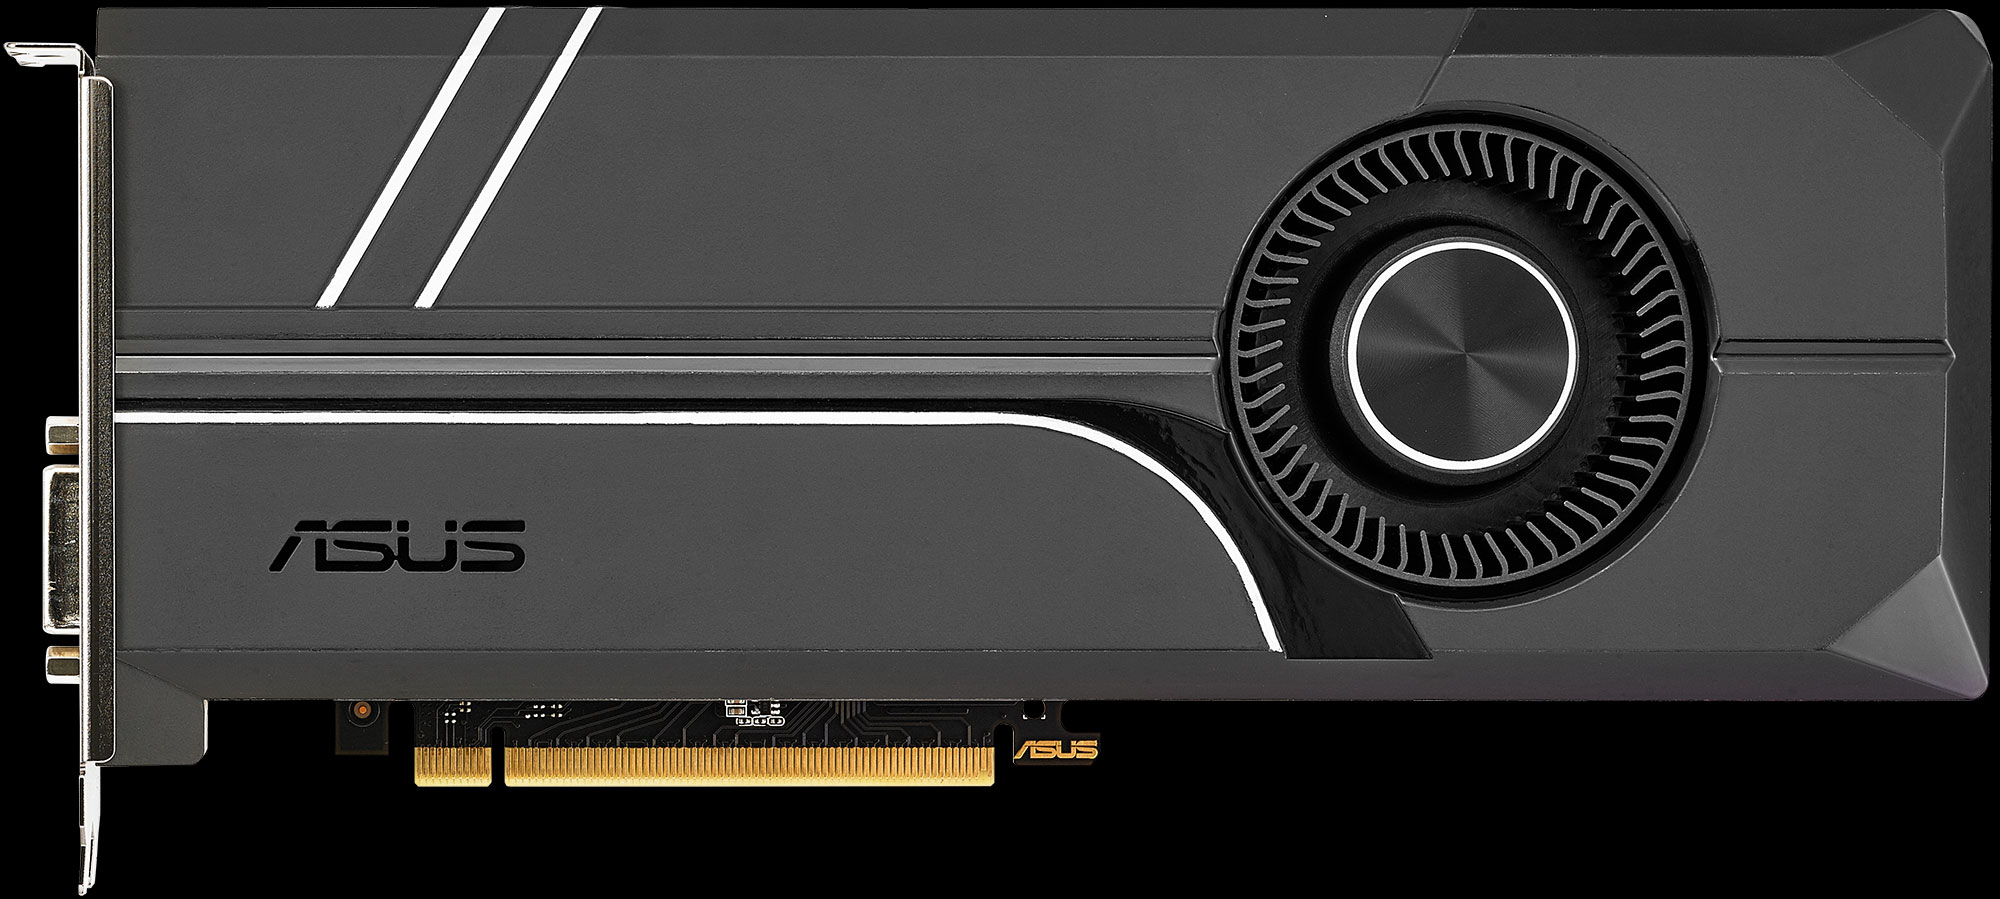 ROG Strix supersizes the GeForce GTX 1070 Ti graphics card